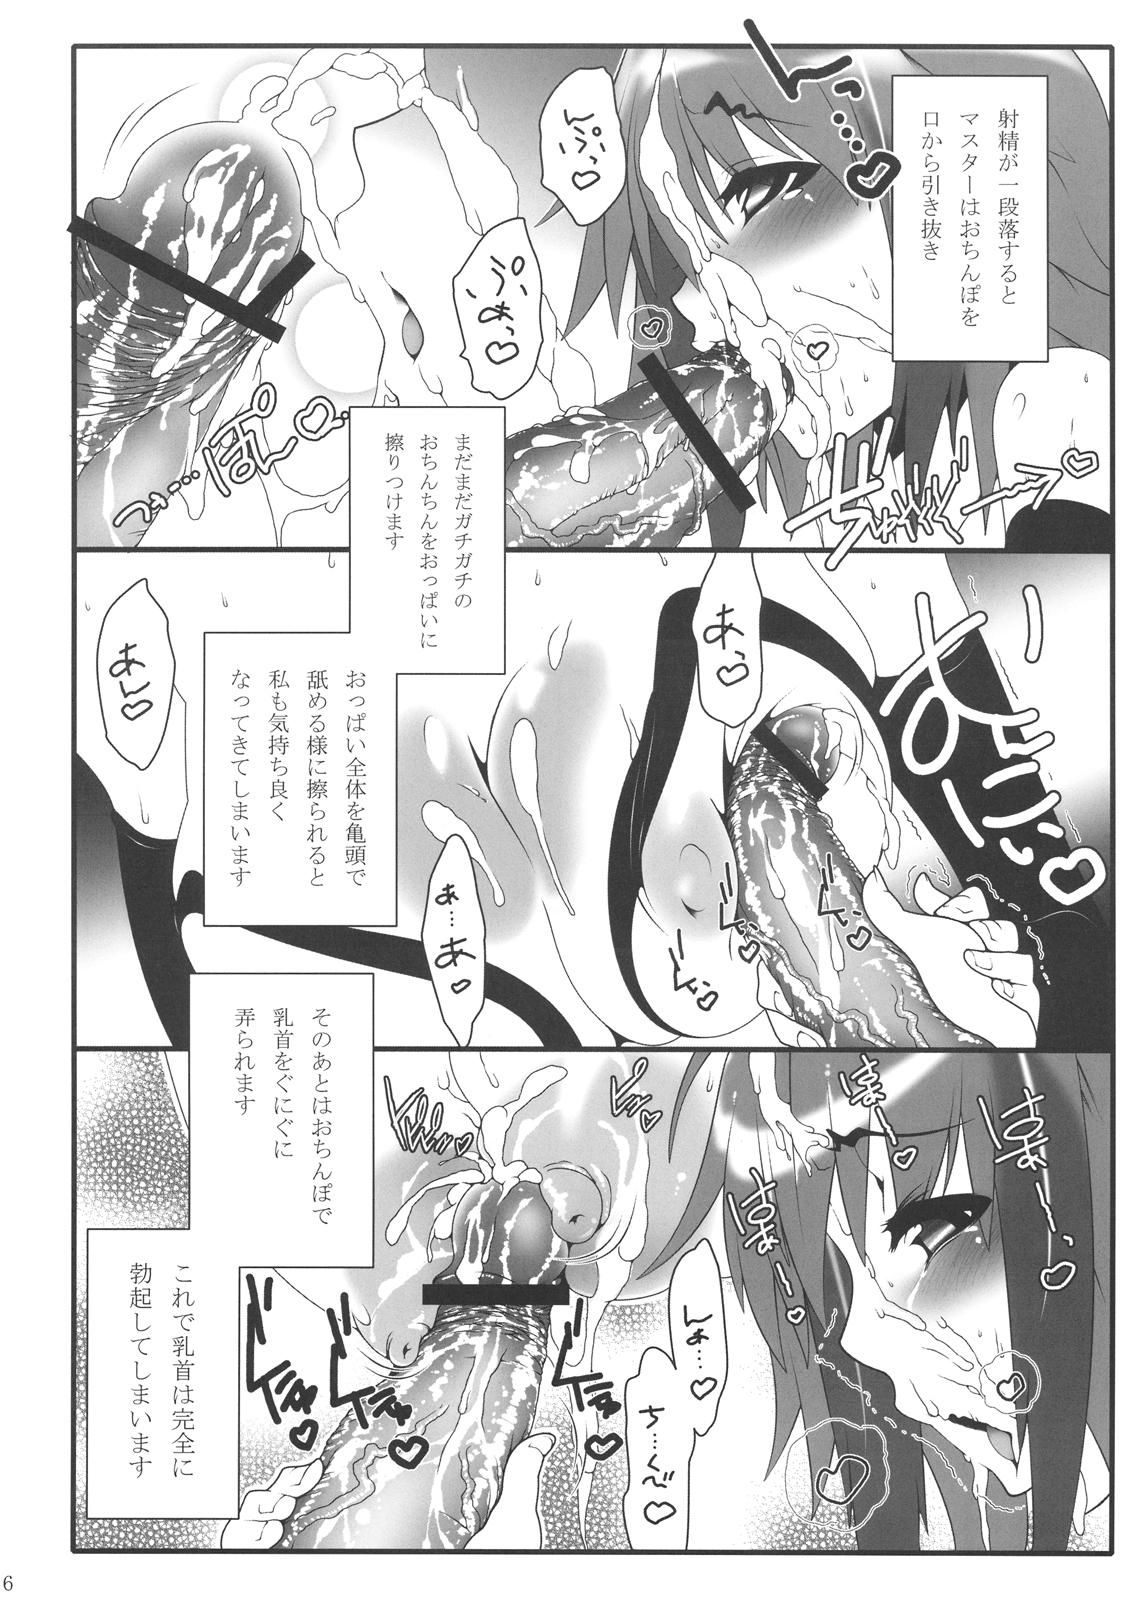 Eng Sub Ikaros-san to. - Sora no otoshimono Pelada - Page 6